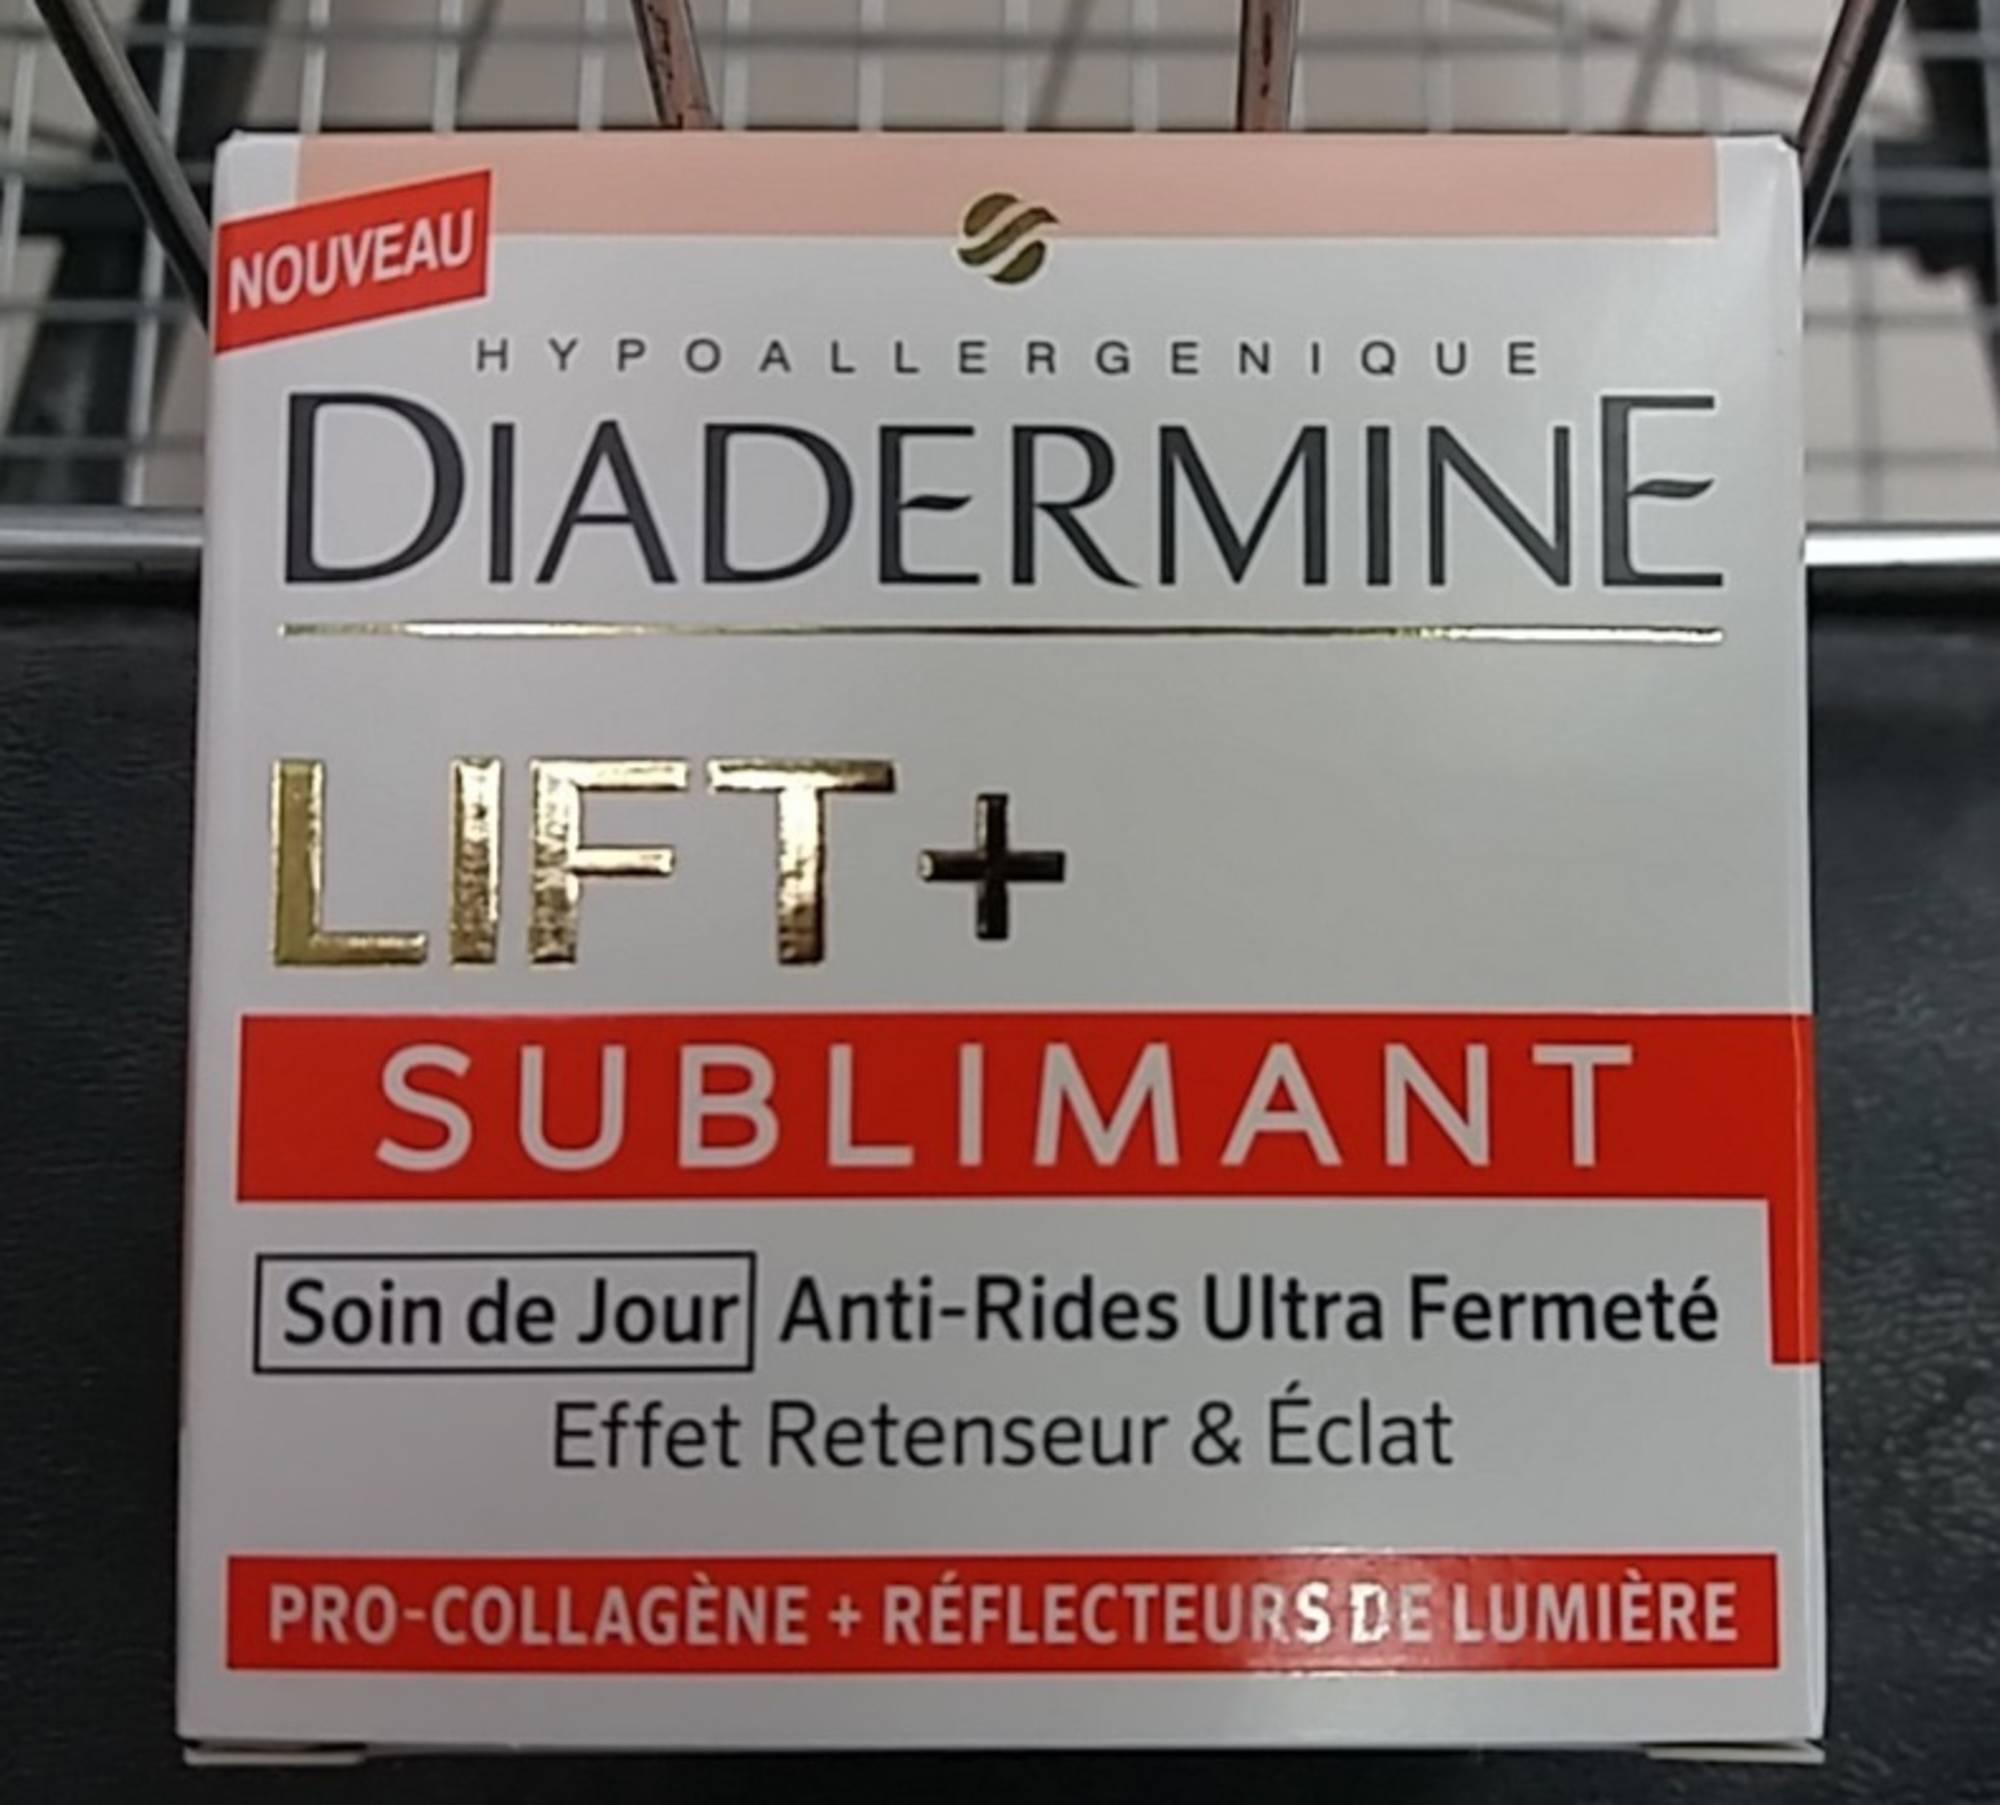 DIADERMINE - Lift + sublimant